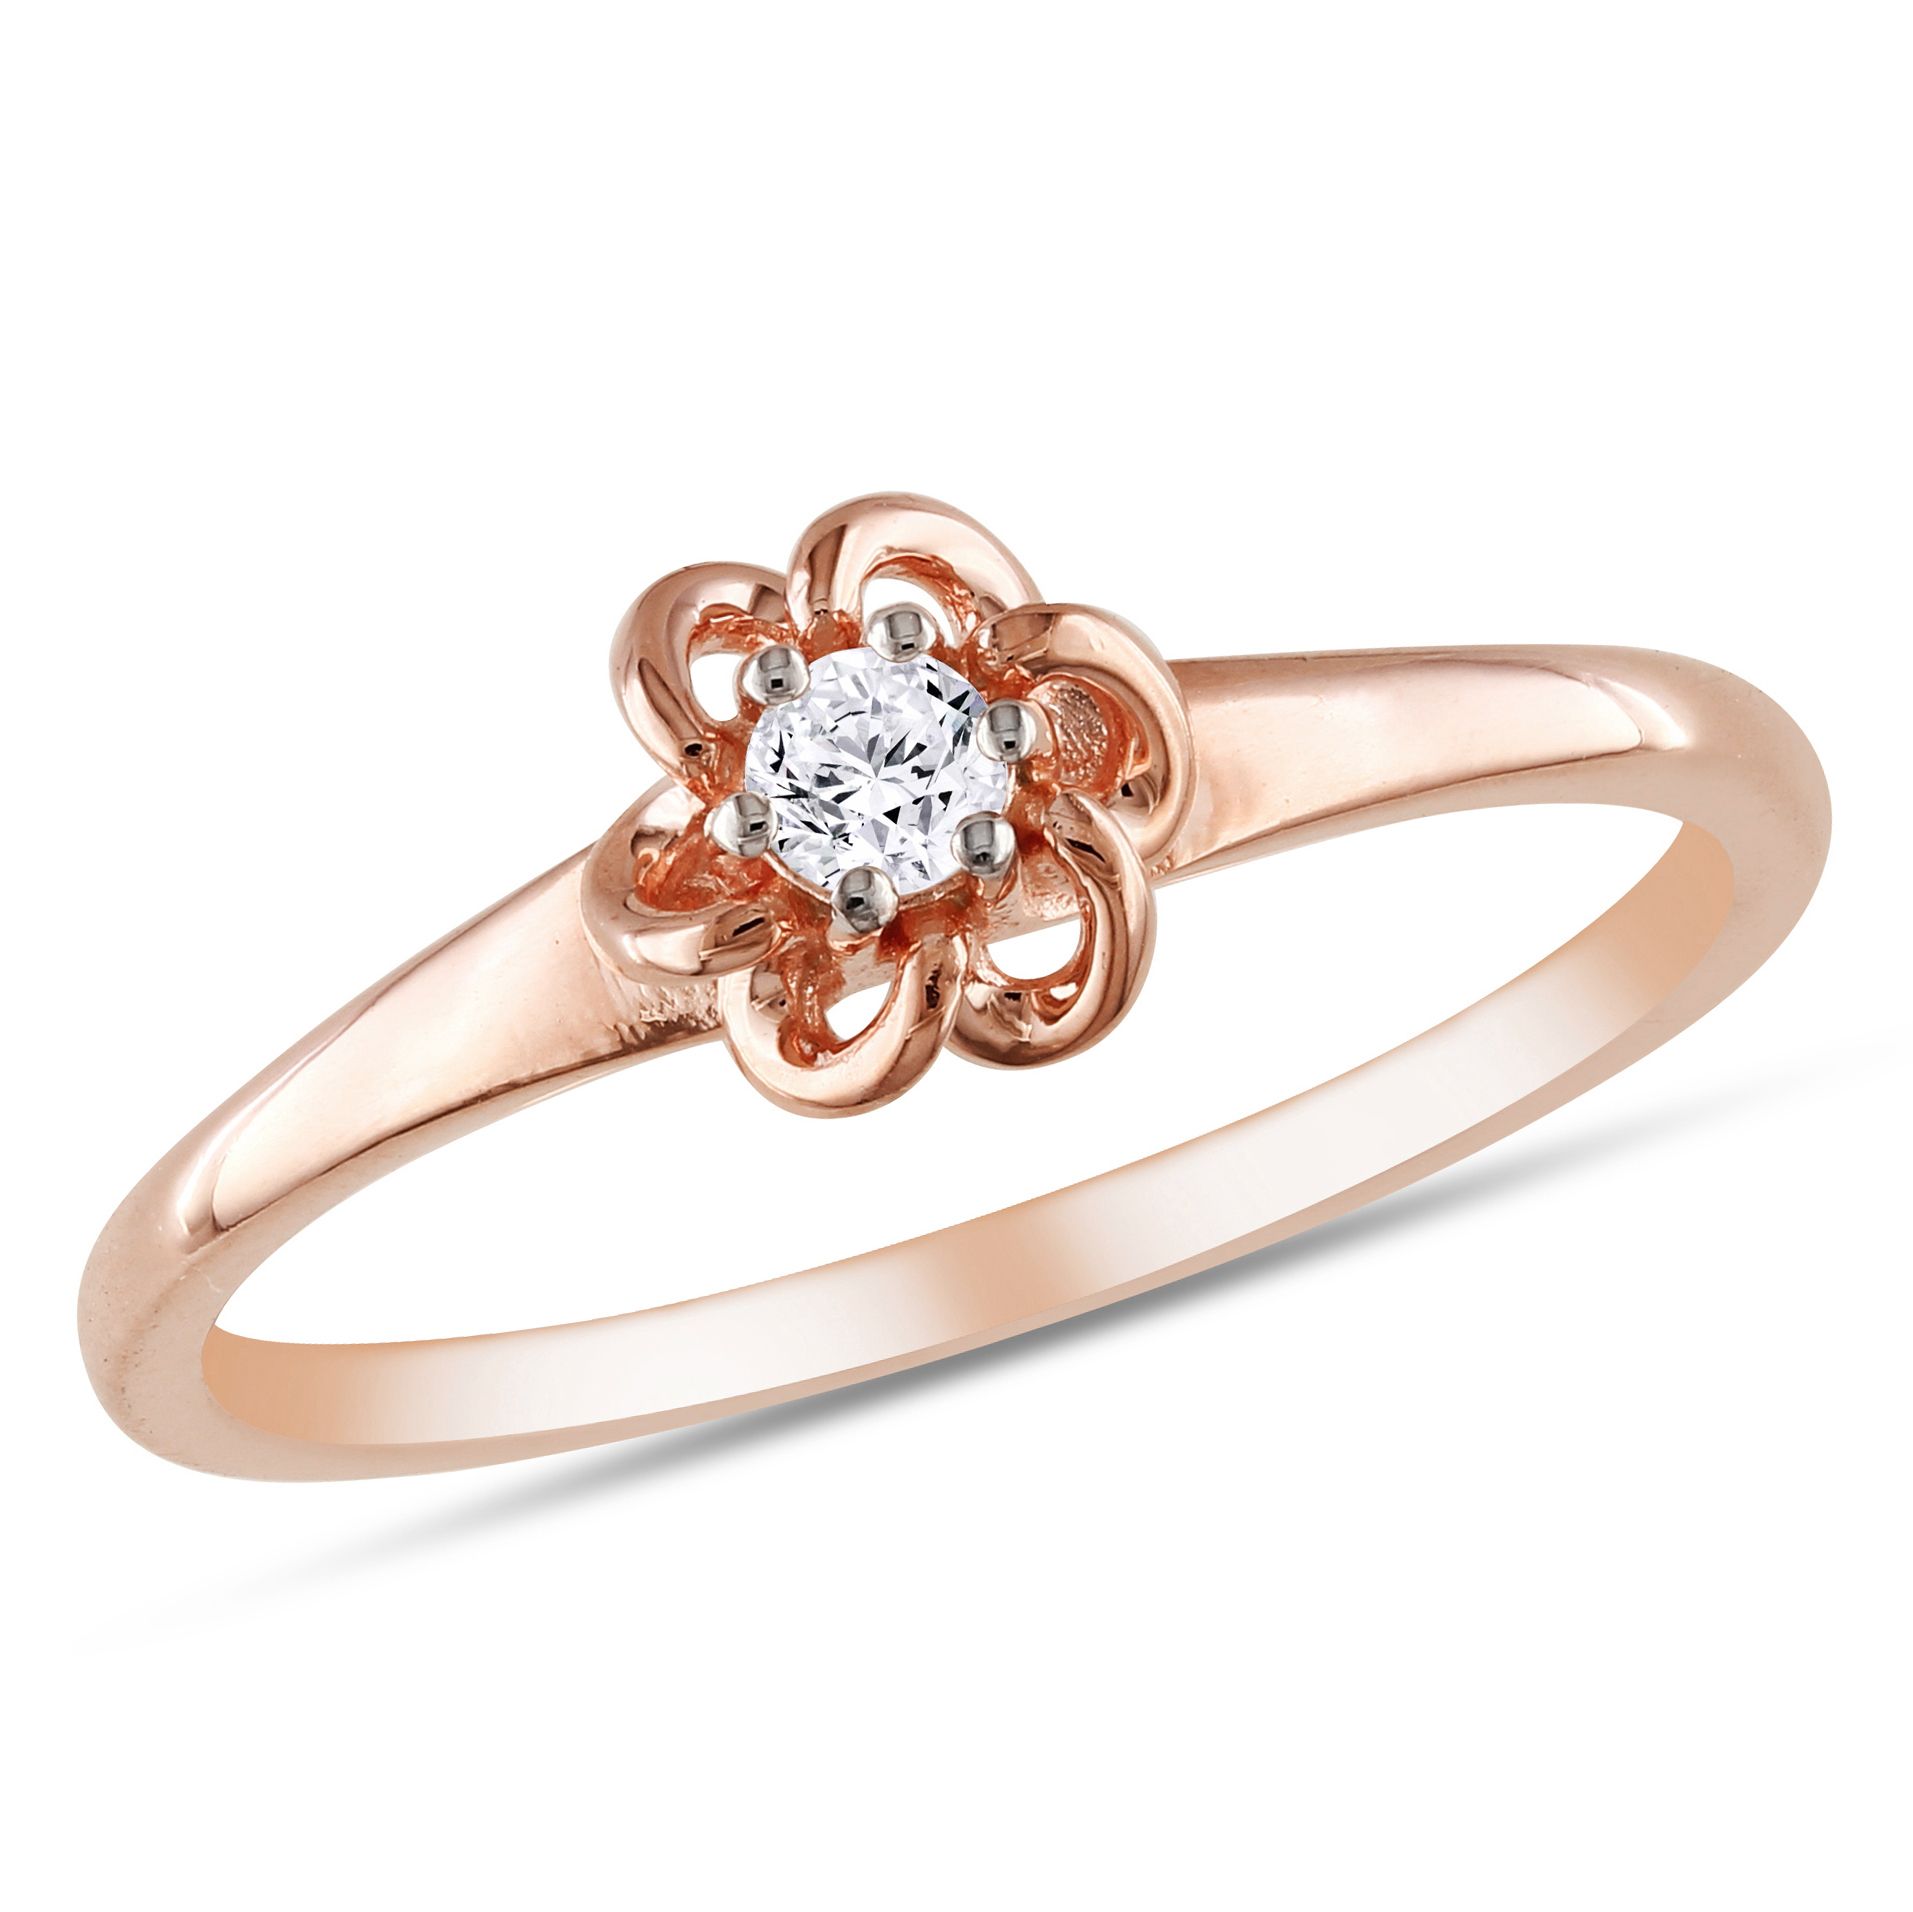 1/10 CTTW Diamond Fashion Ring Set in 10K Pink Gold (GH I2;I3)